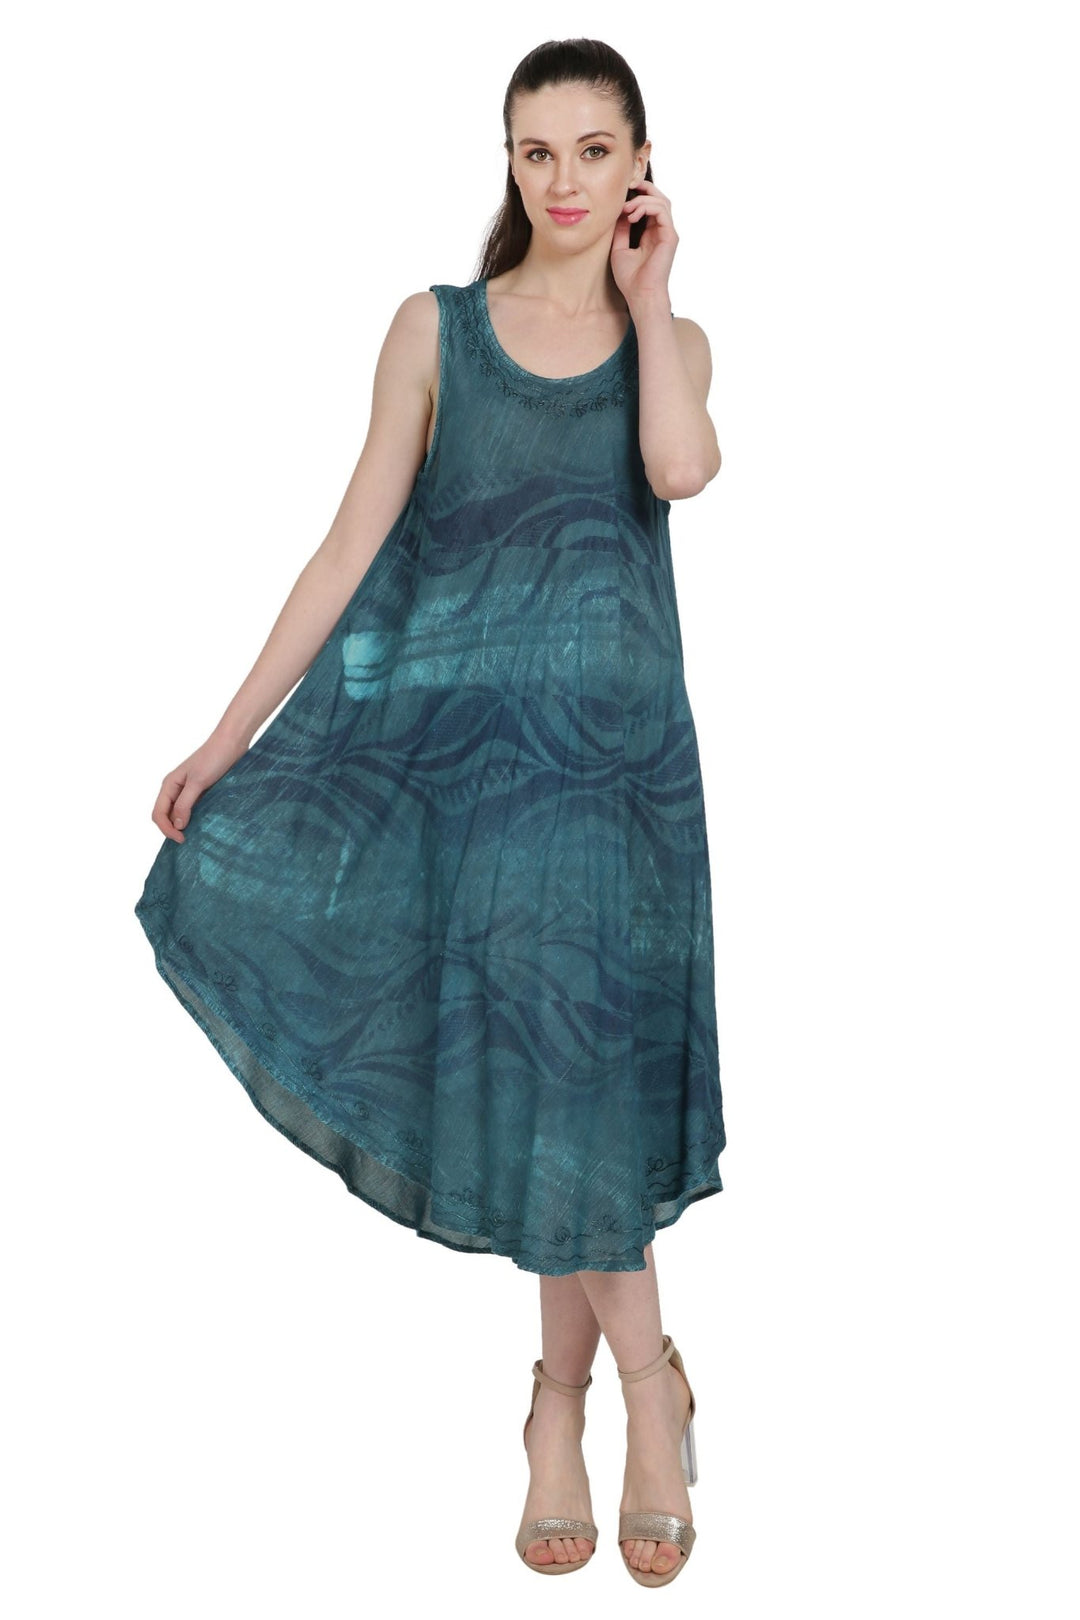 Block Print Tie Dye Umbrella Beach Dress UD48-2301 - Advance Apparels Inc